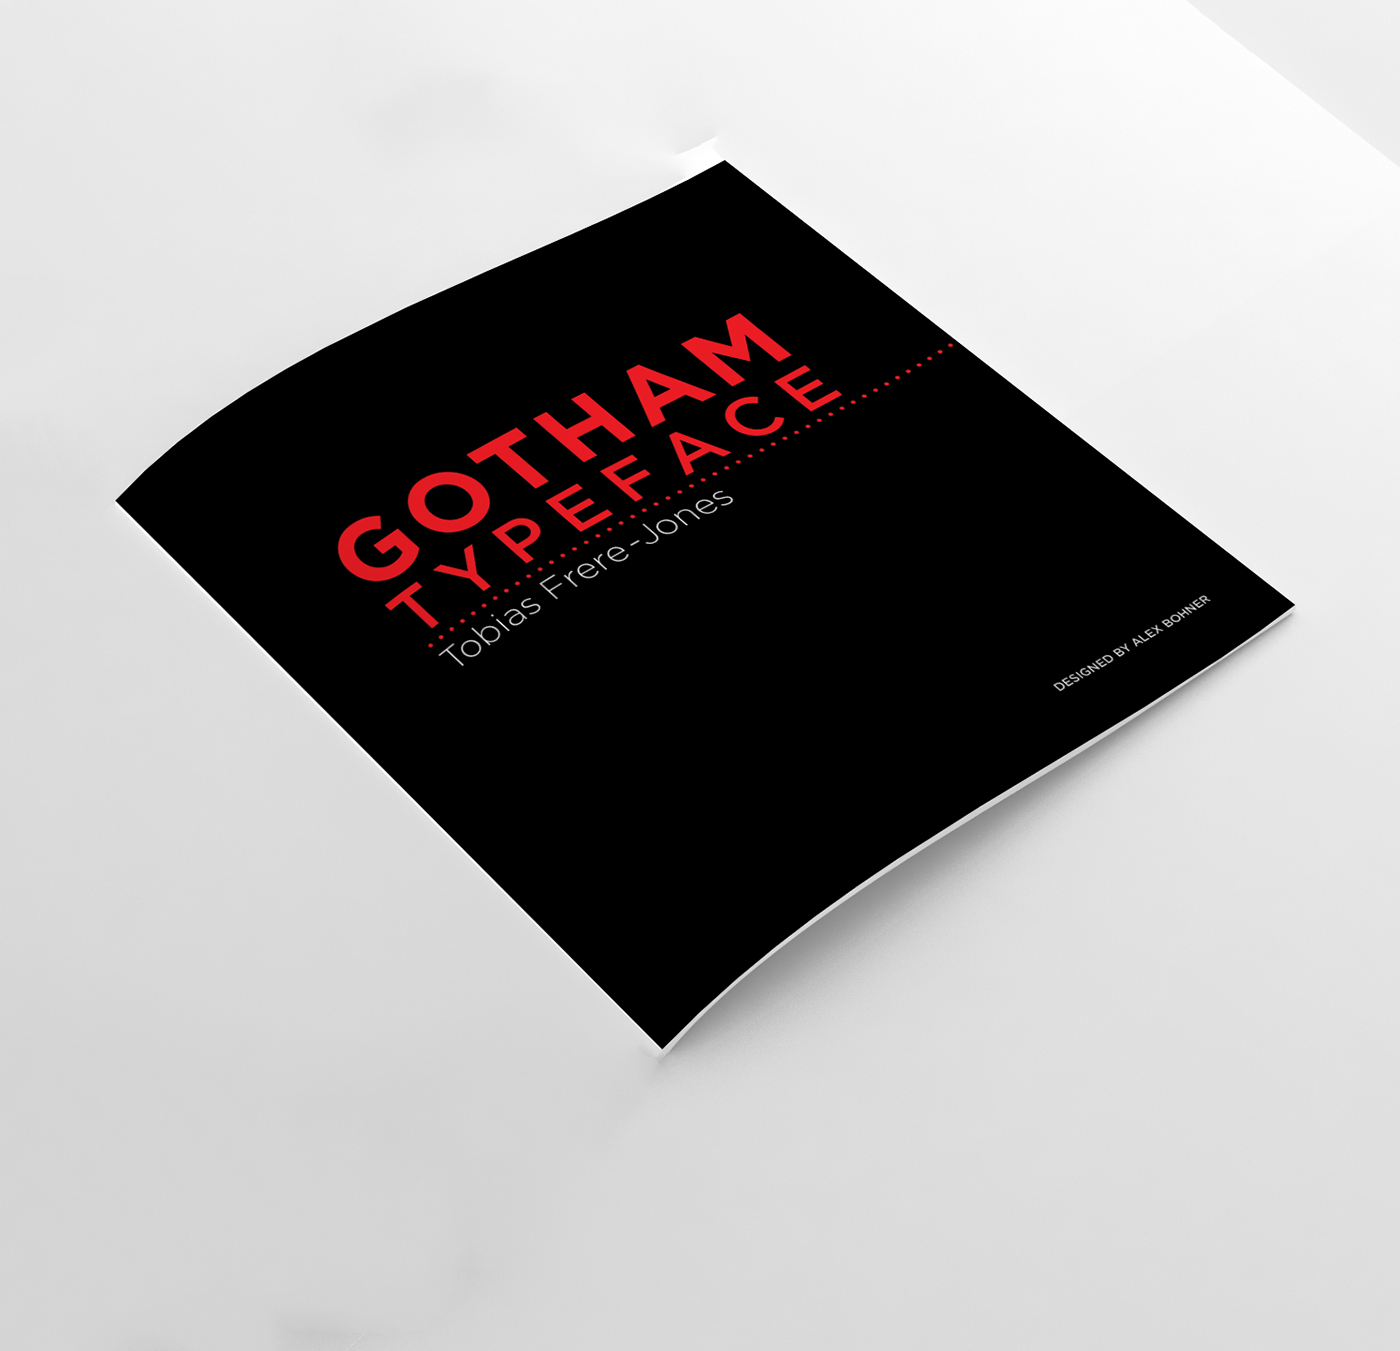 Gotham book шрифт. Gotham typeface. Gotham Pro шрифт. Шрифт на обложках книг Blizzard.